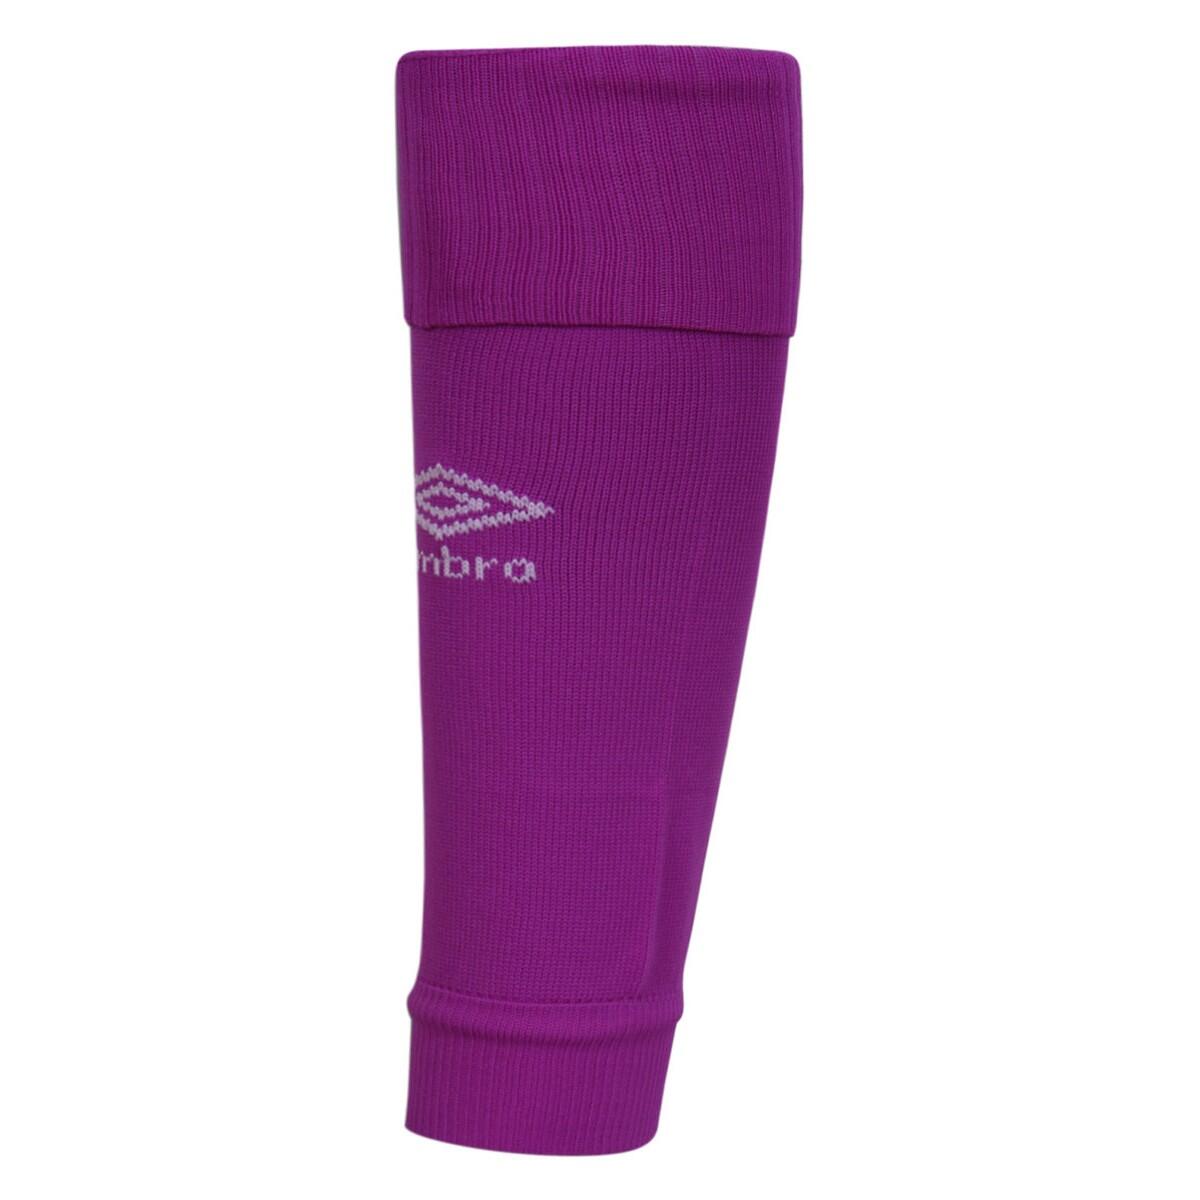 UMBRO Mens Leg Sleeves (Purple Cactus/White)